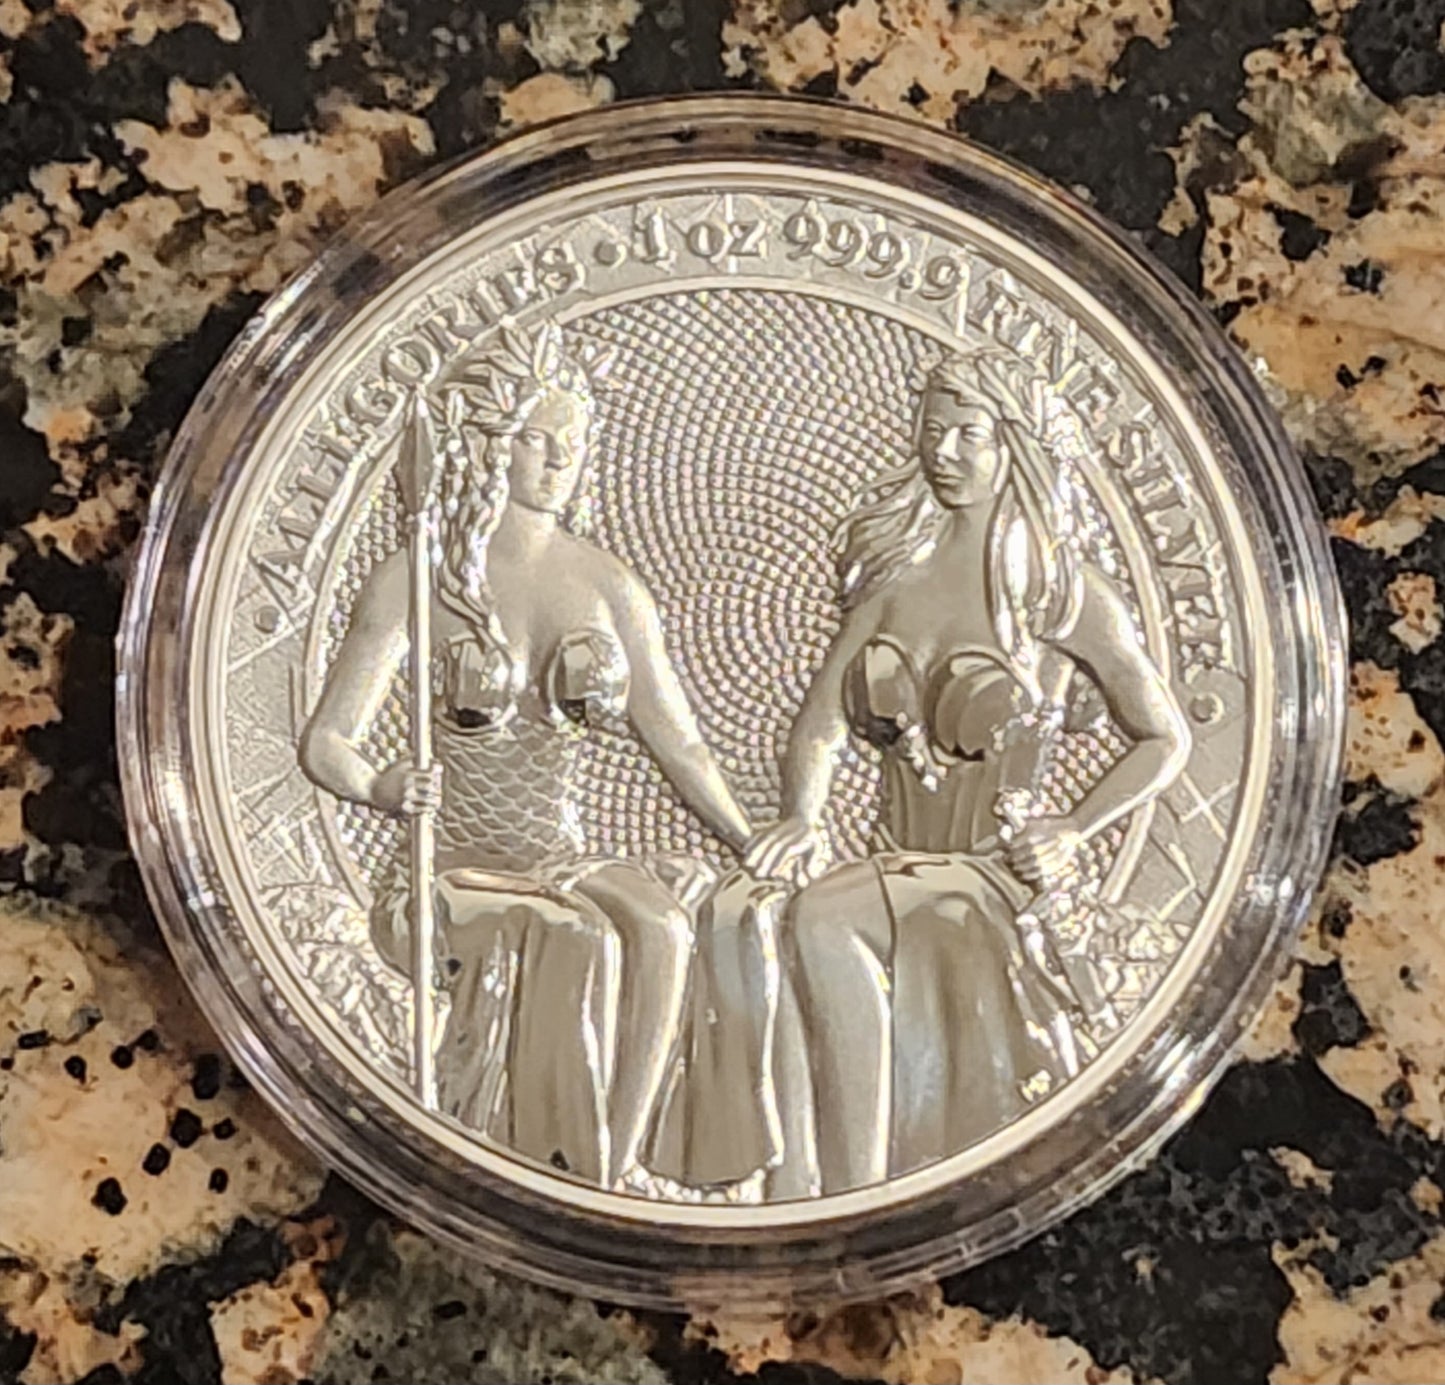 2021 AUSTRIA & GERMANIA THE ALLEGORIES 1 oz .9999 Silver BU Coin in capsule w/ COA - 25,000 Minted